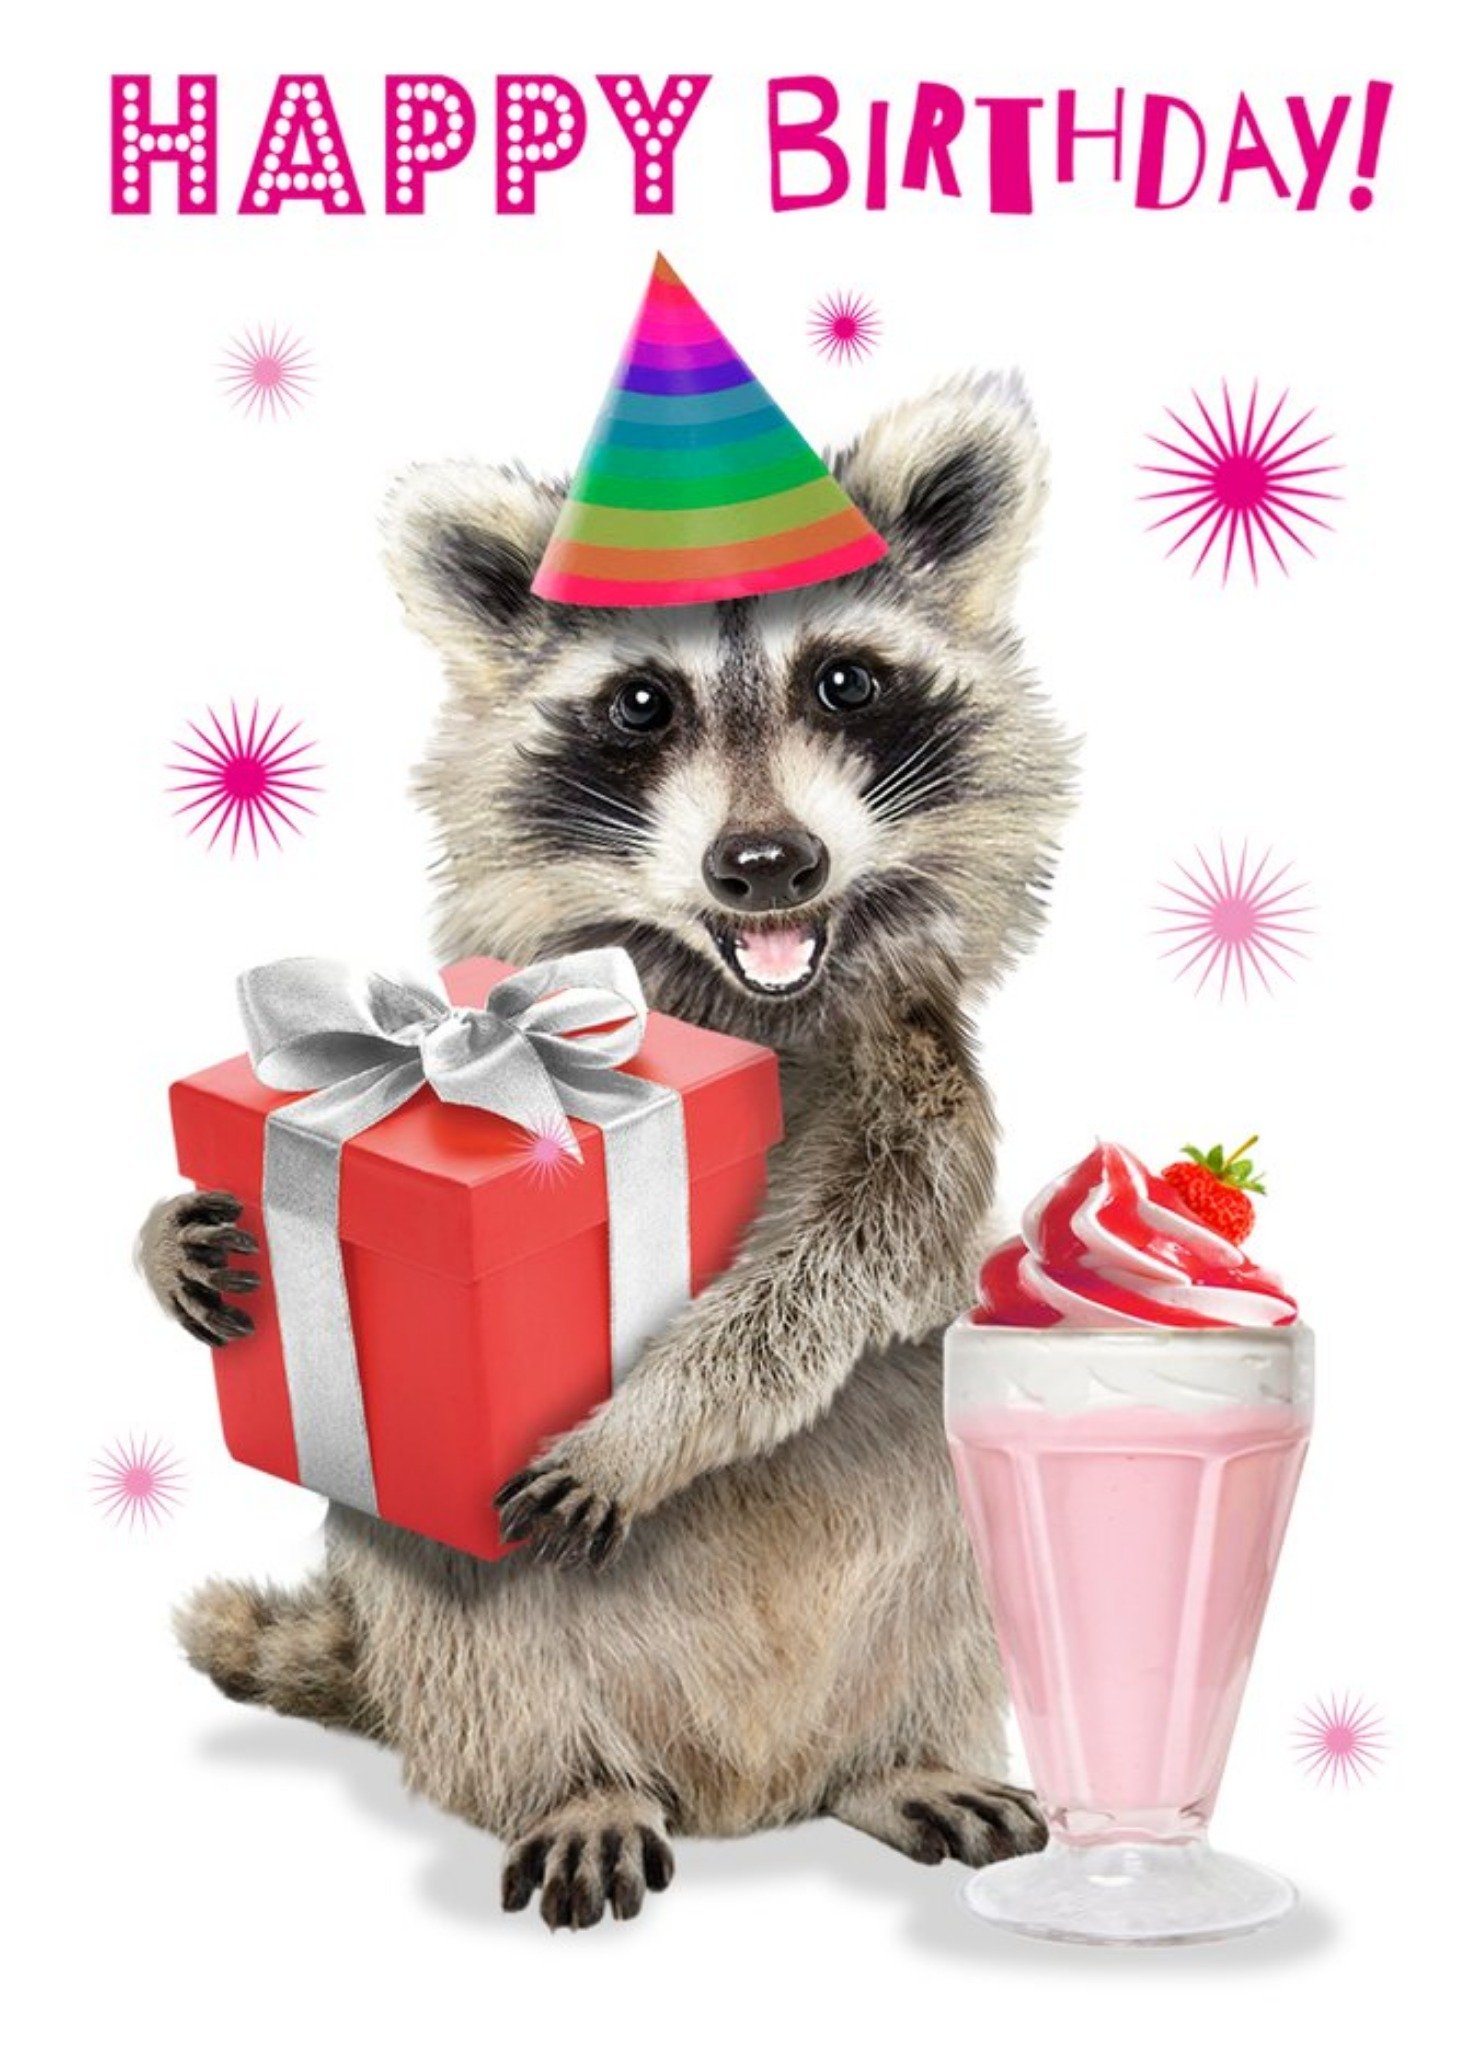 Moonpig Cute Racoon Holding Present With Ice Cream Sundae Birthday Card Ecard